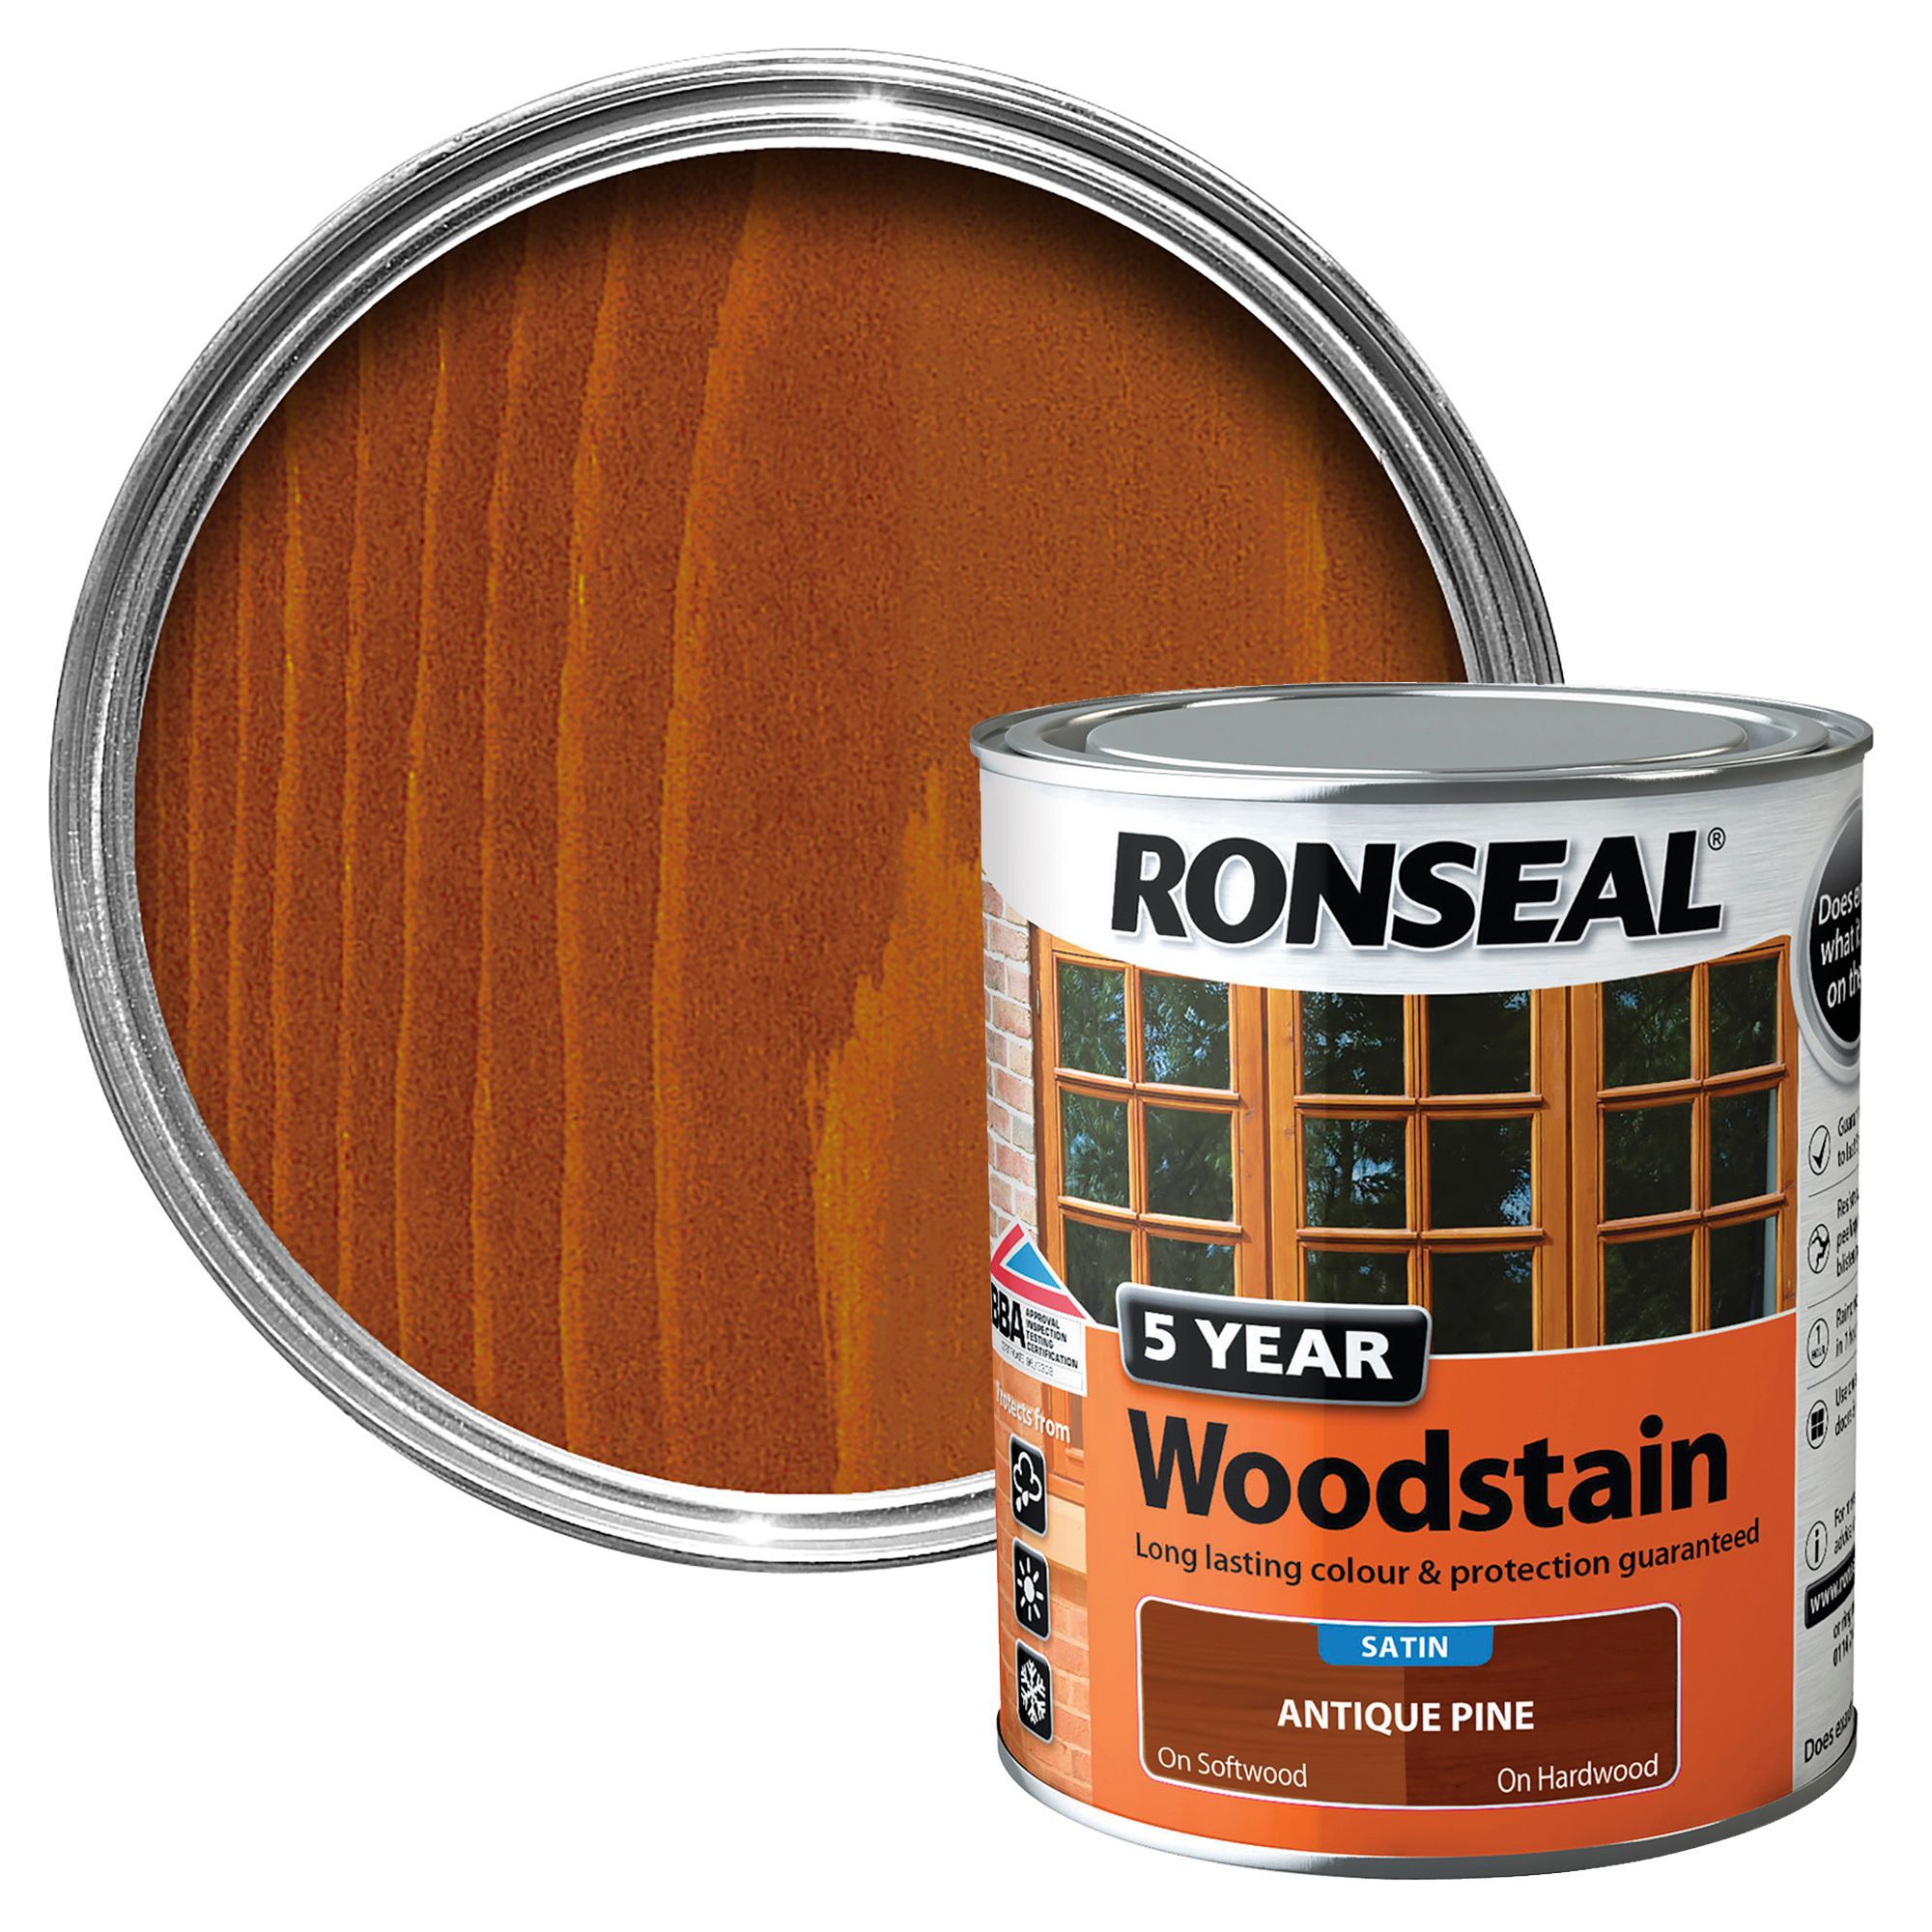 Ronseal Antique pine High satin sheen Wood stain, 0.75